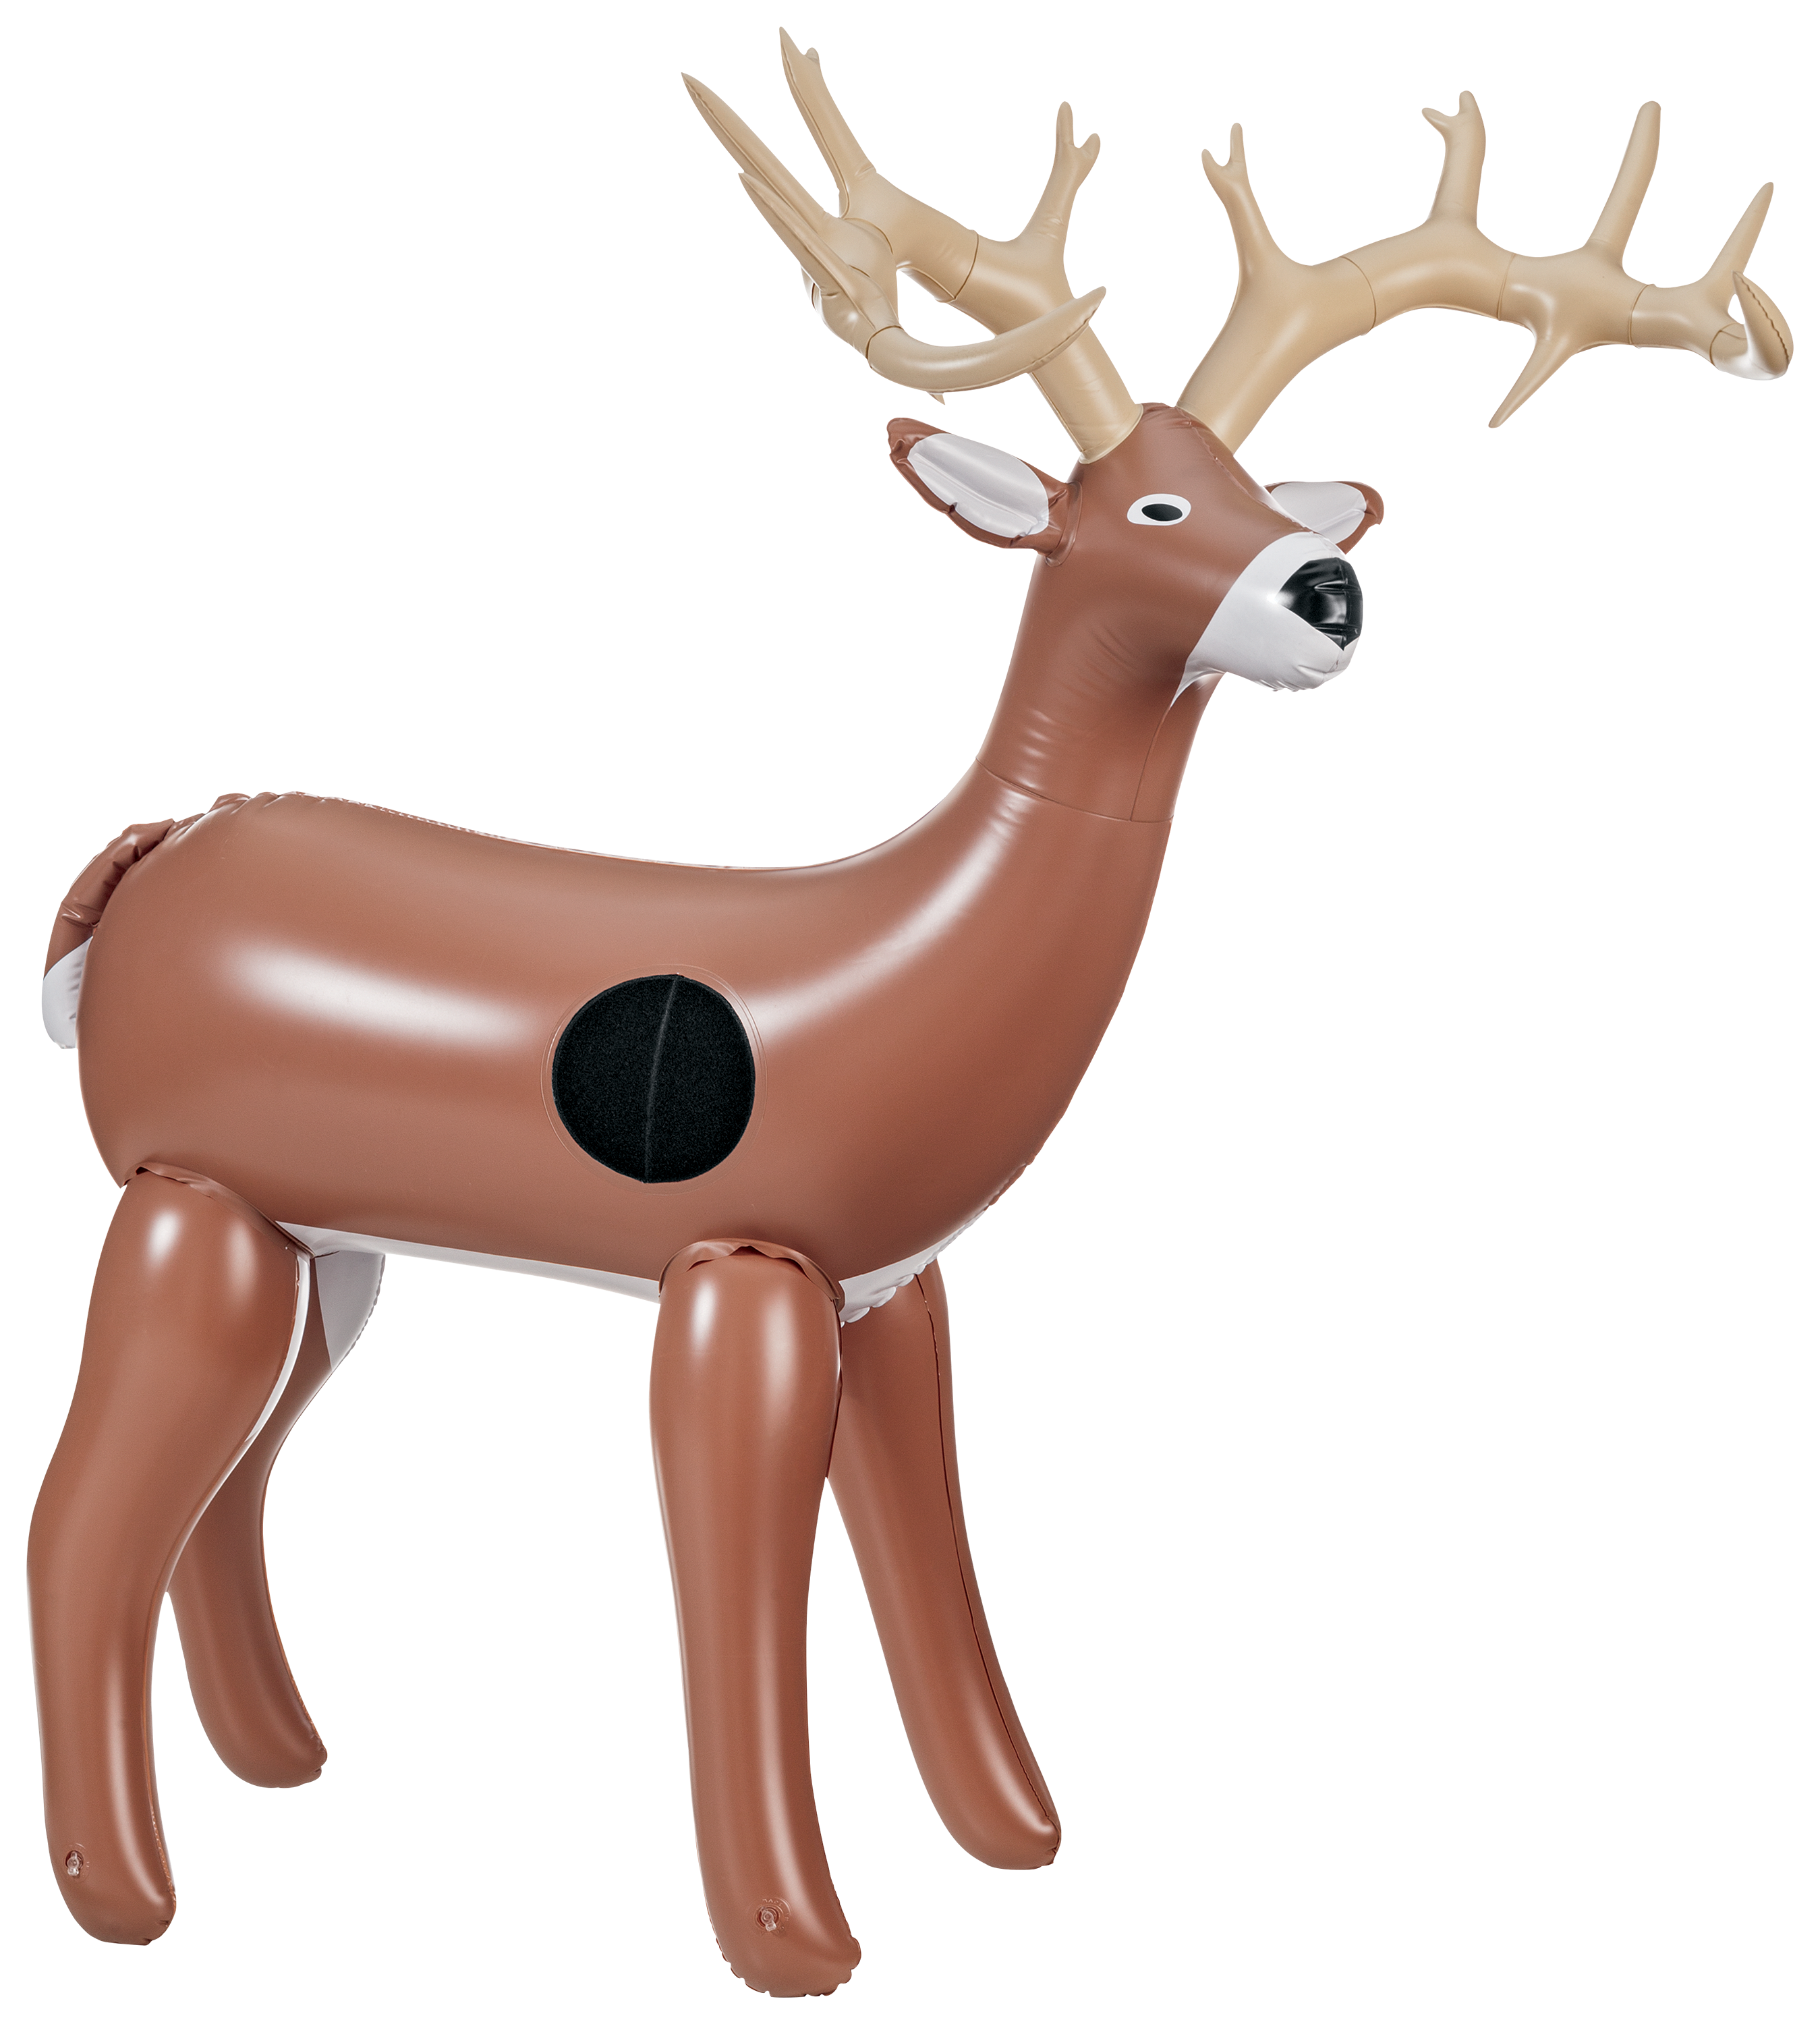 Bass Pro Shops Toy 3D Inflatable Deer Target